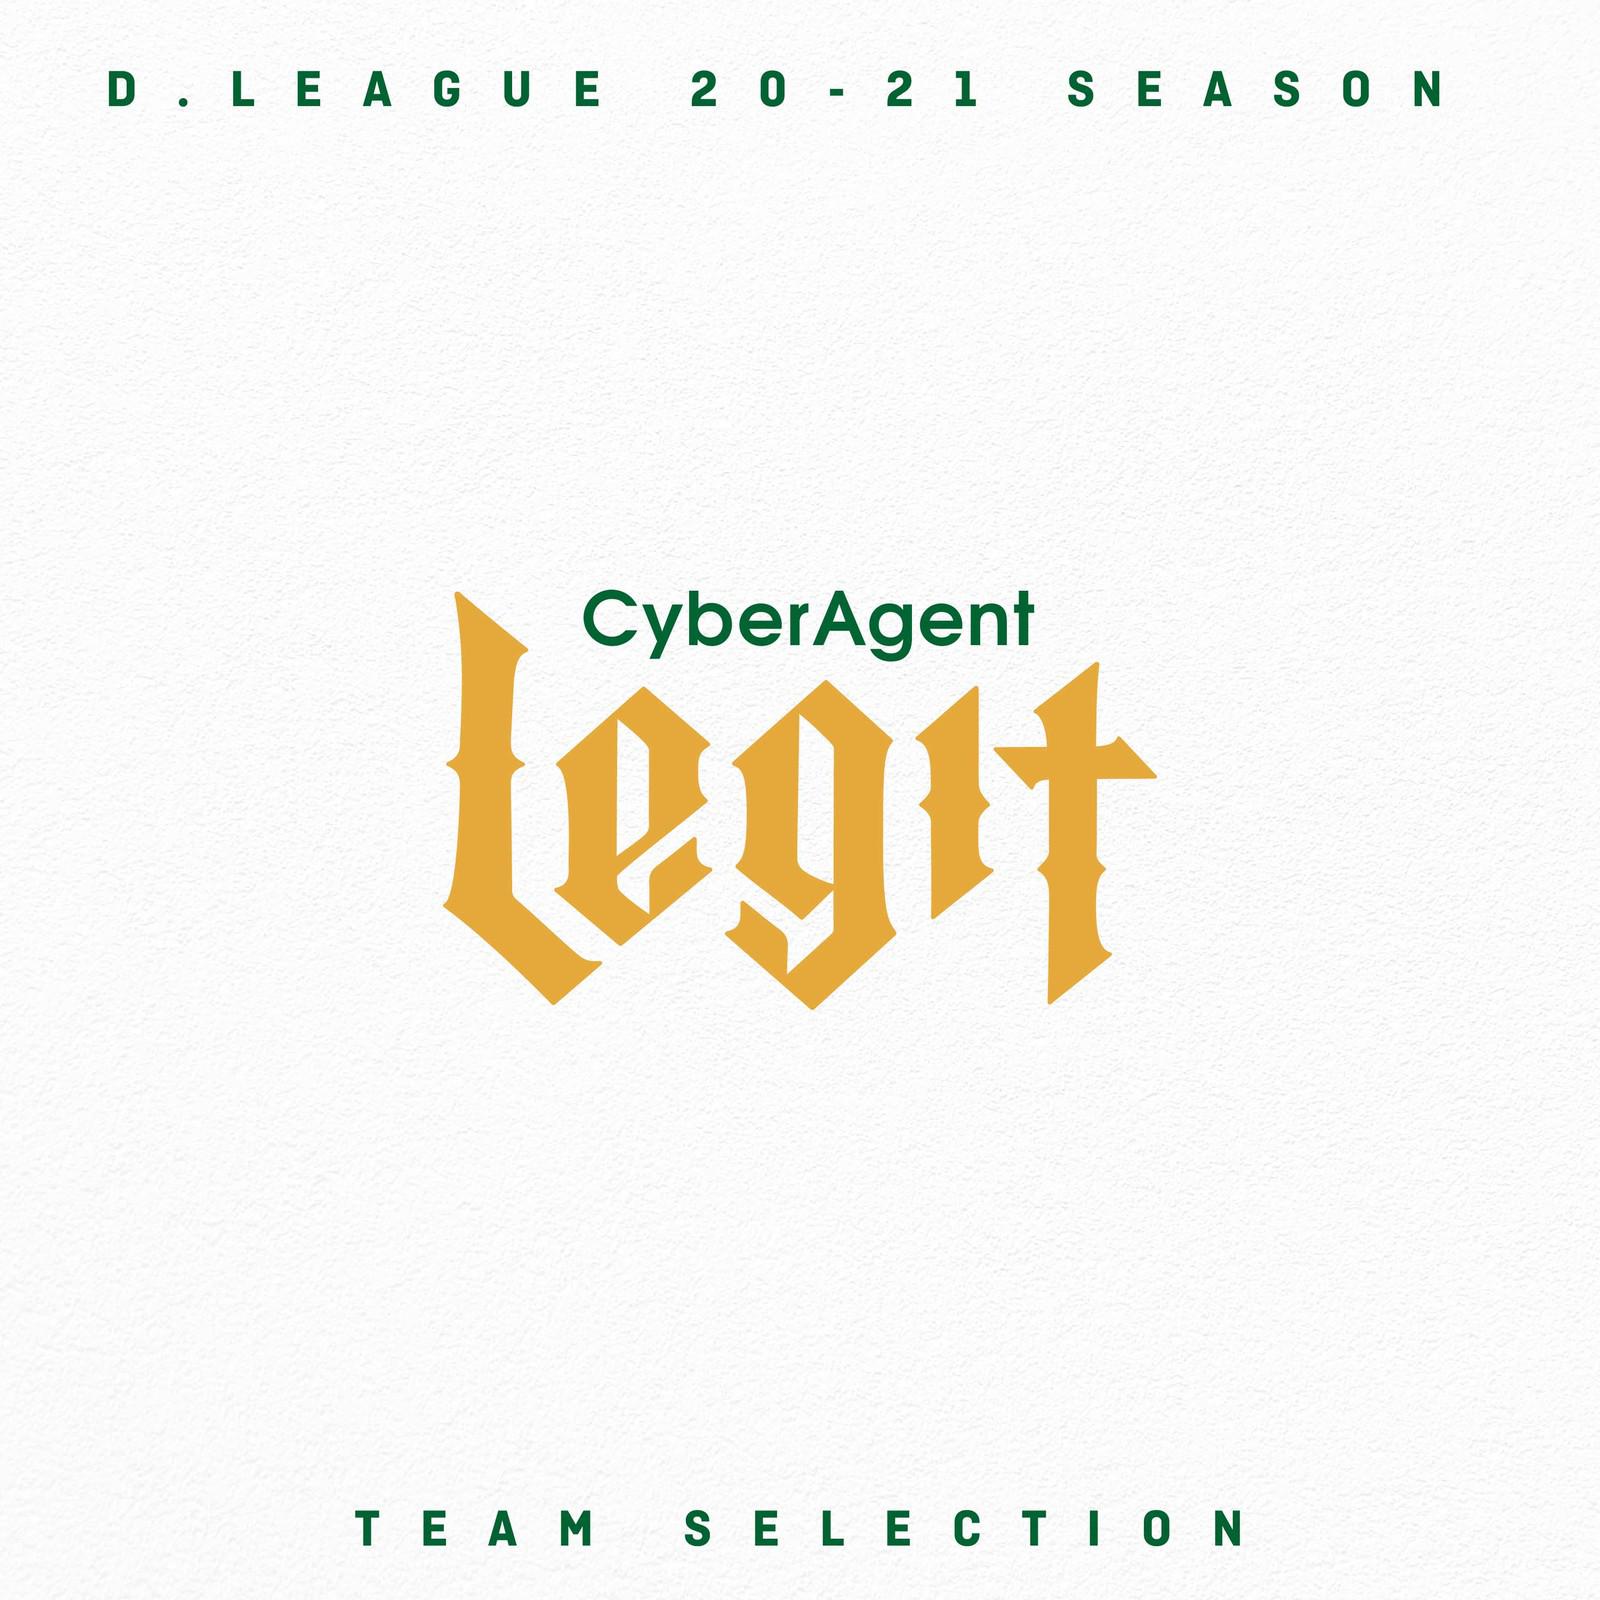 CyberAgent Legit - So Swell (feat. Kzyboost)